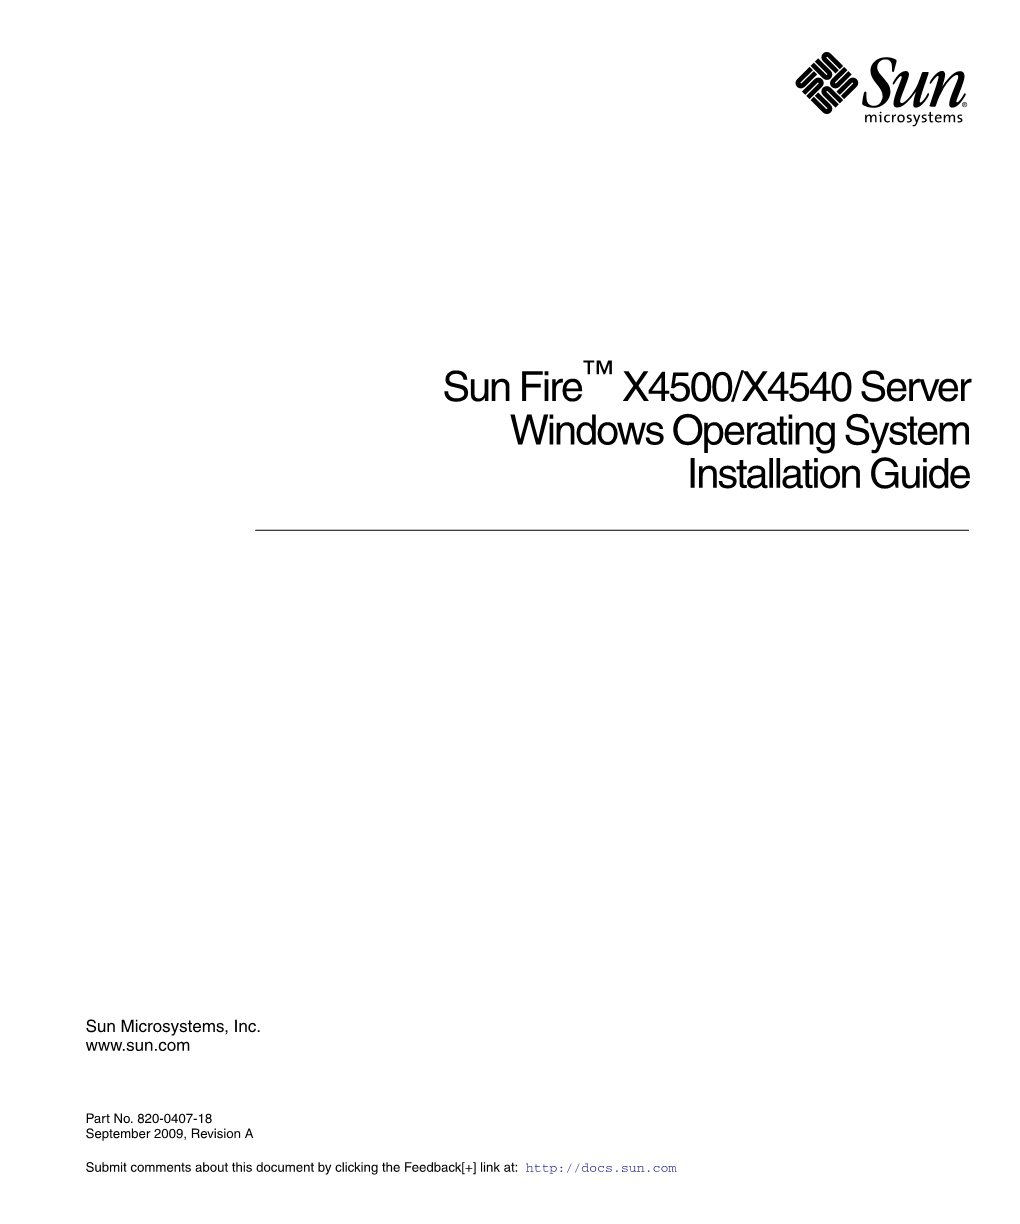 Sun Fire X4500/X4540 Server Windows Operating System